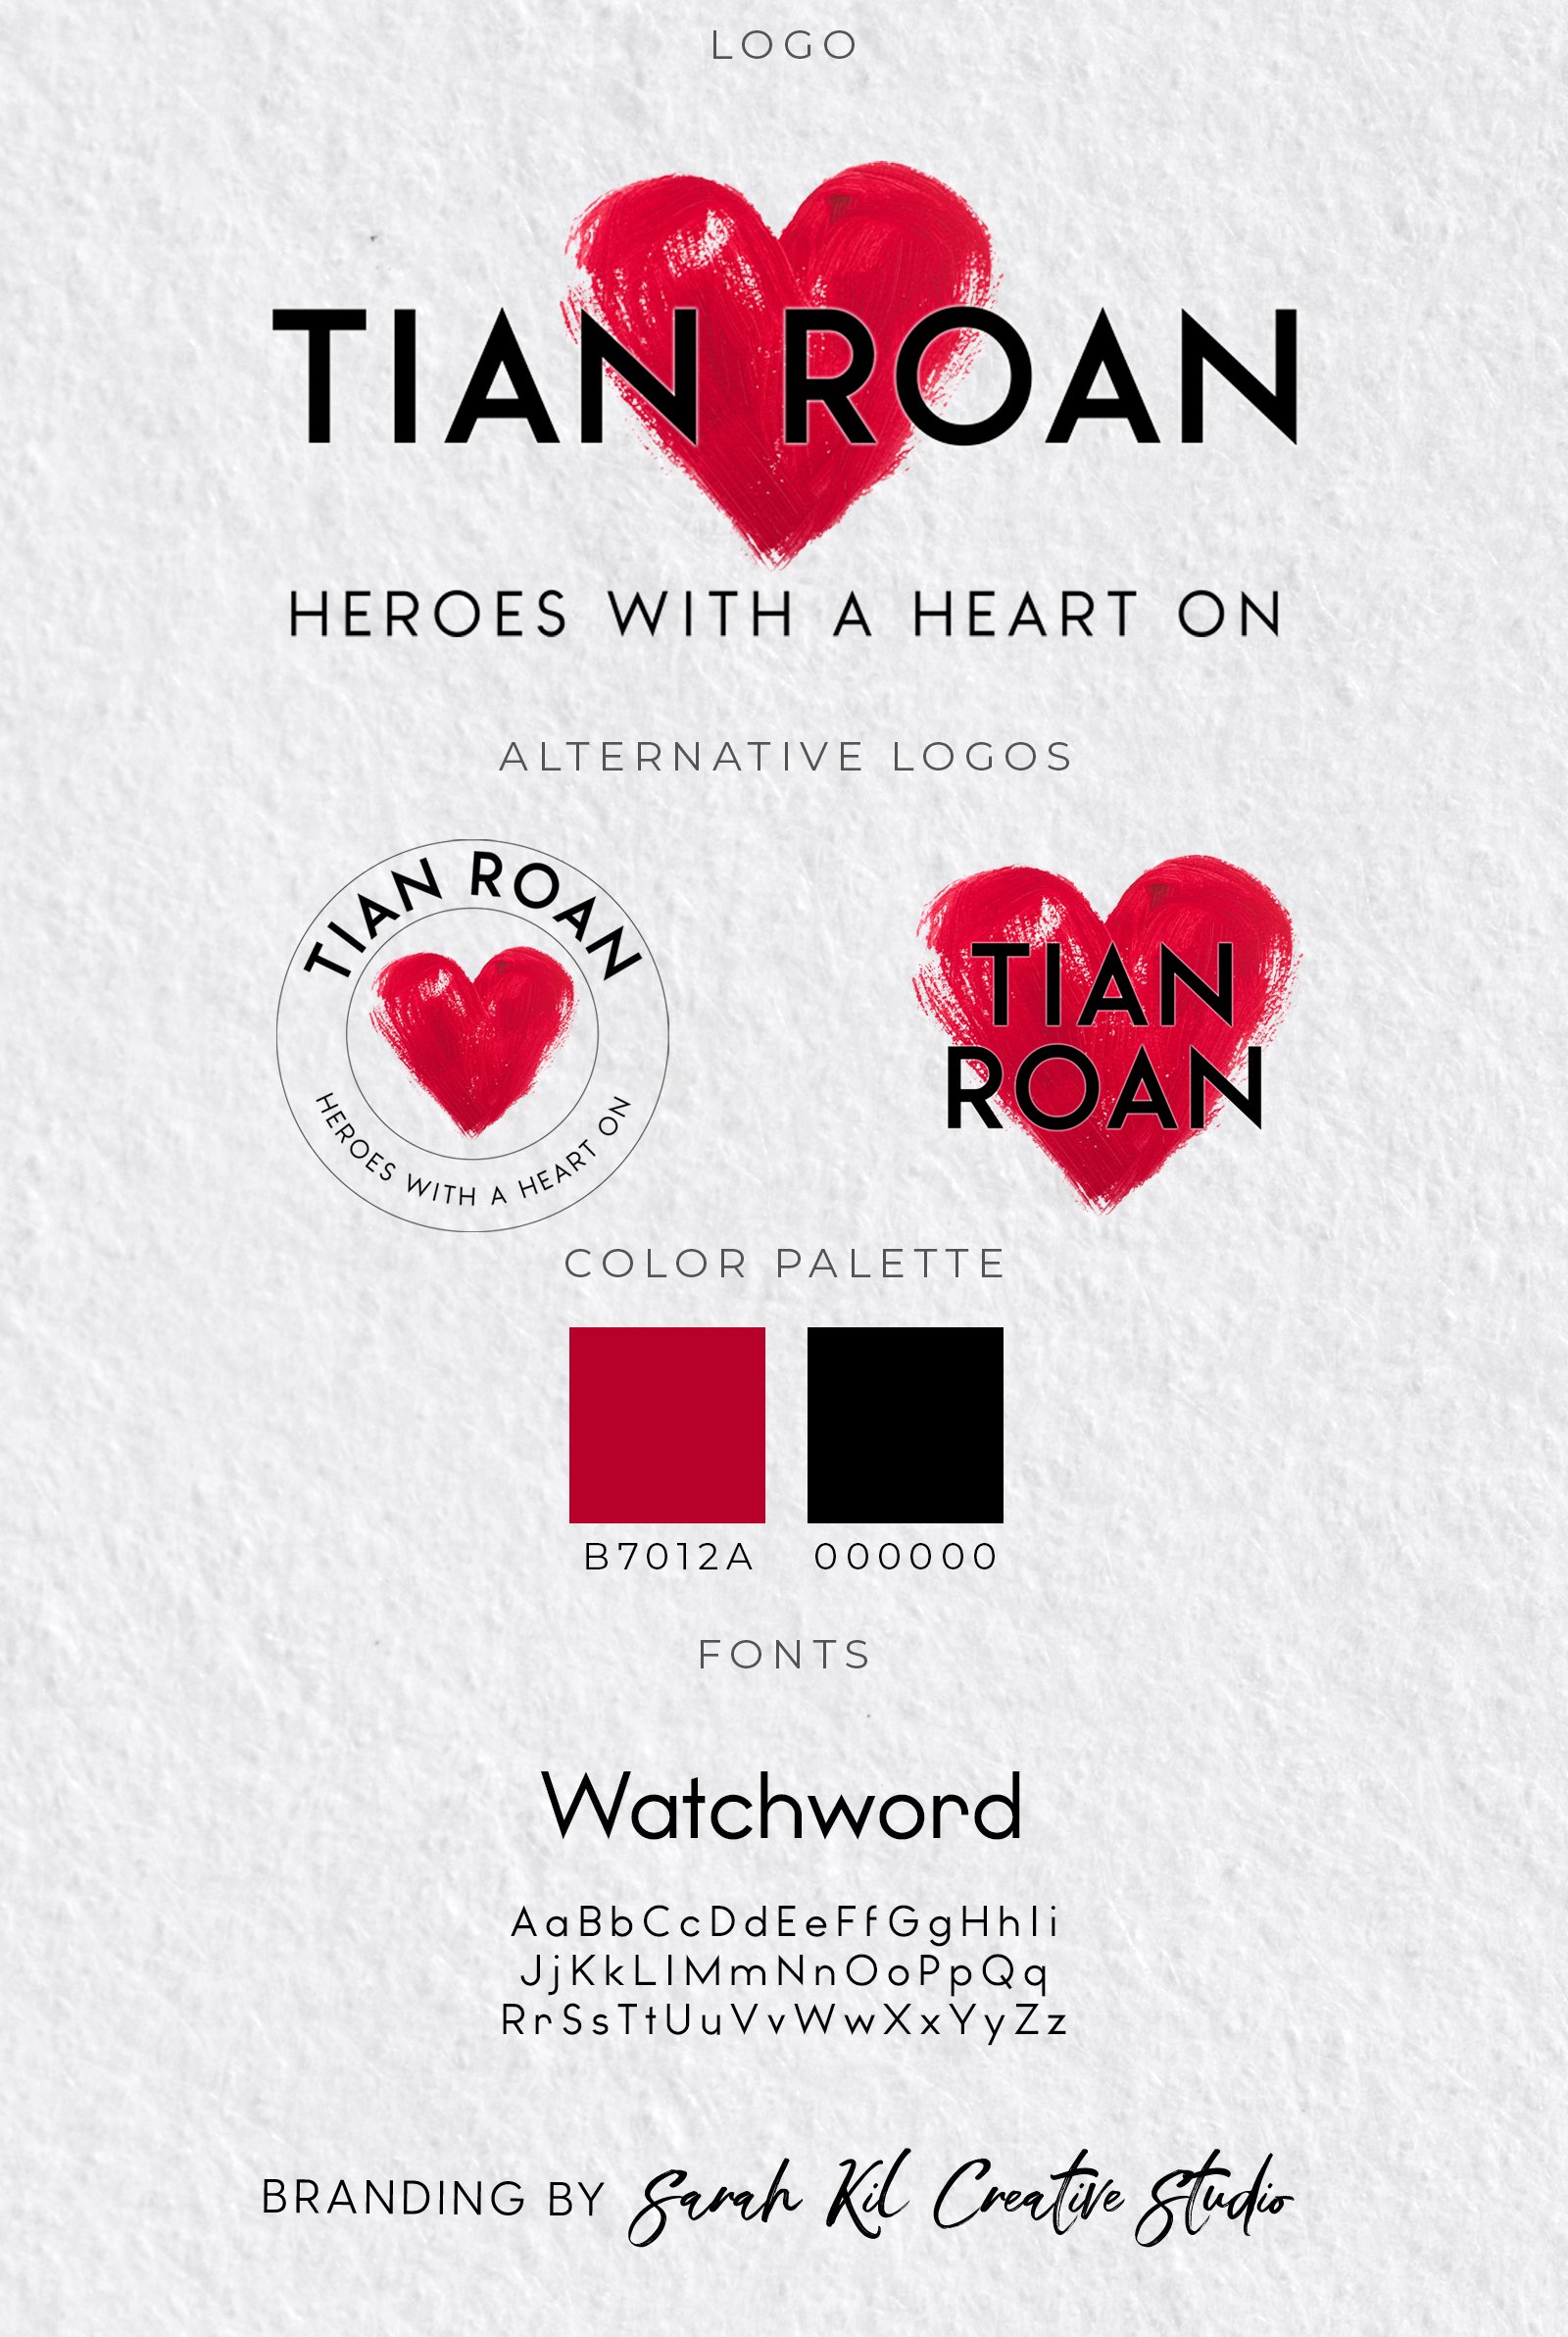 Tian Roan Branding Kit.jpg